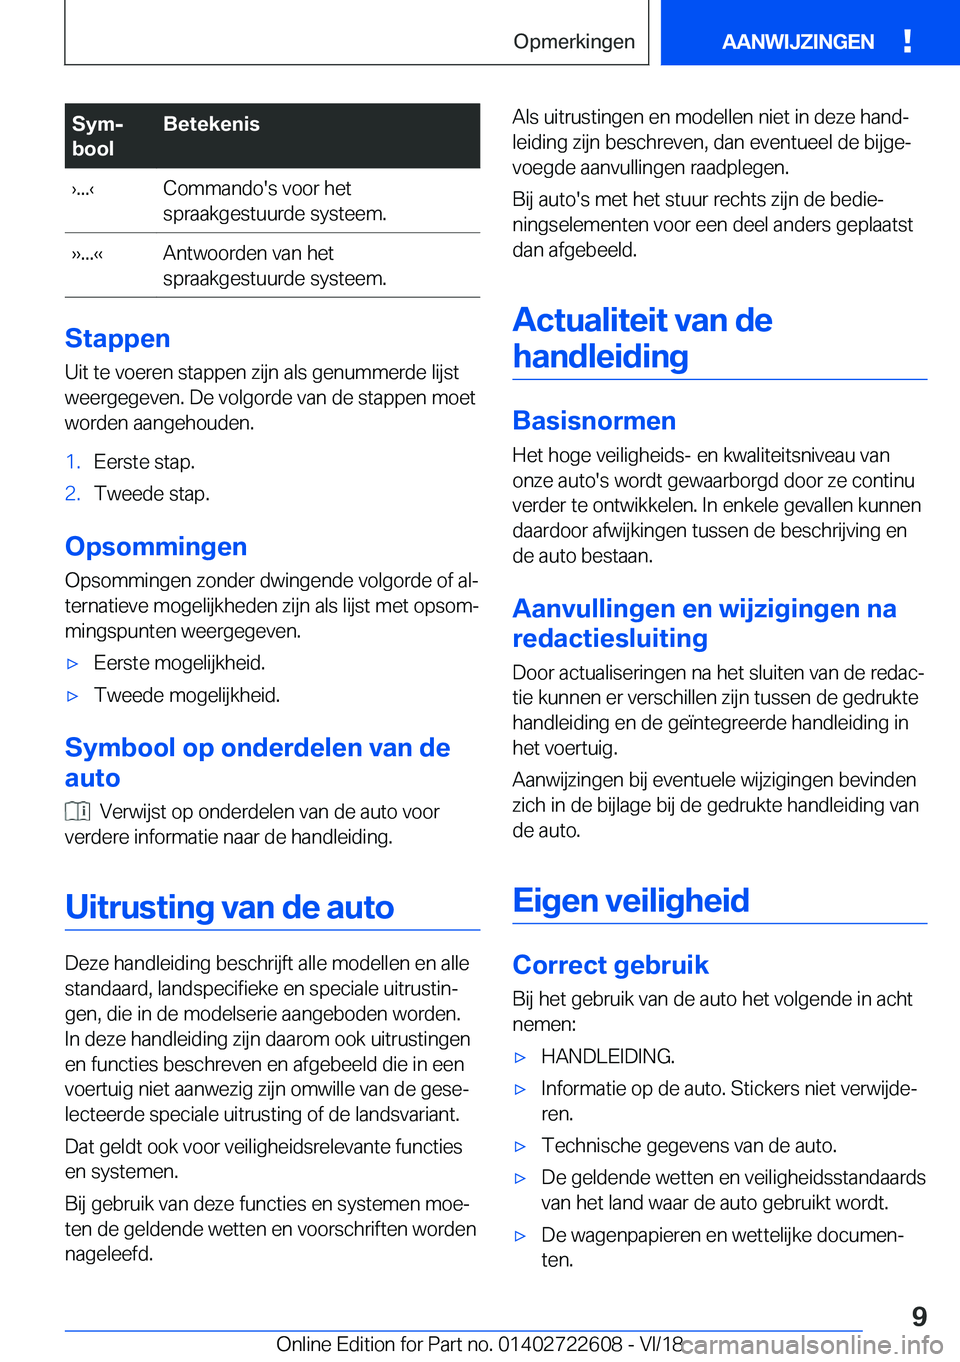 BMW 5 SERIES 2019  Instructieboekjes (in Dutch) �S�y�mj
�b�o�o�l�B�e�t�e�k�e�n�i�s